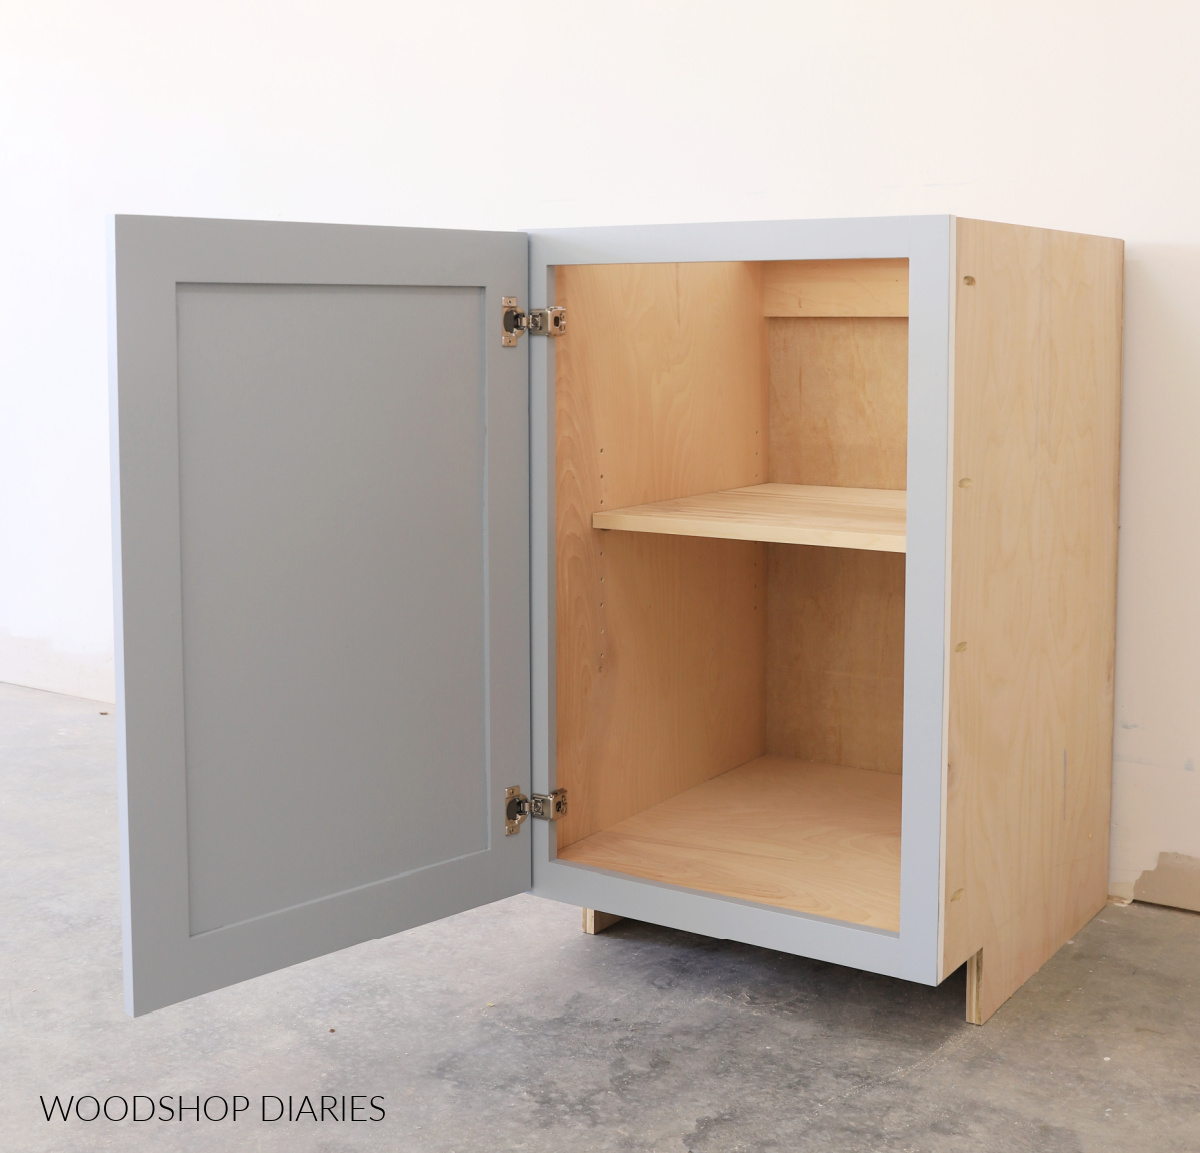 Base cabinet box with door open showing adjustable shelf inside on shelf pins